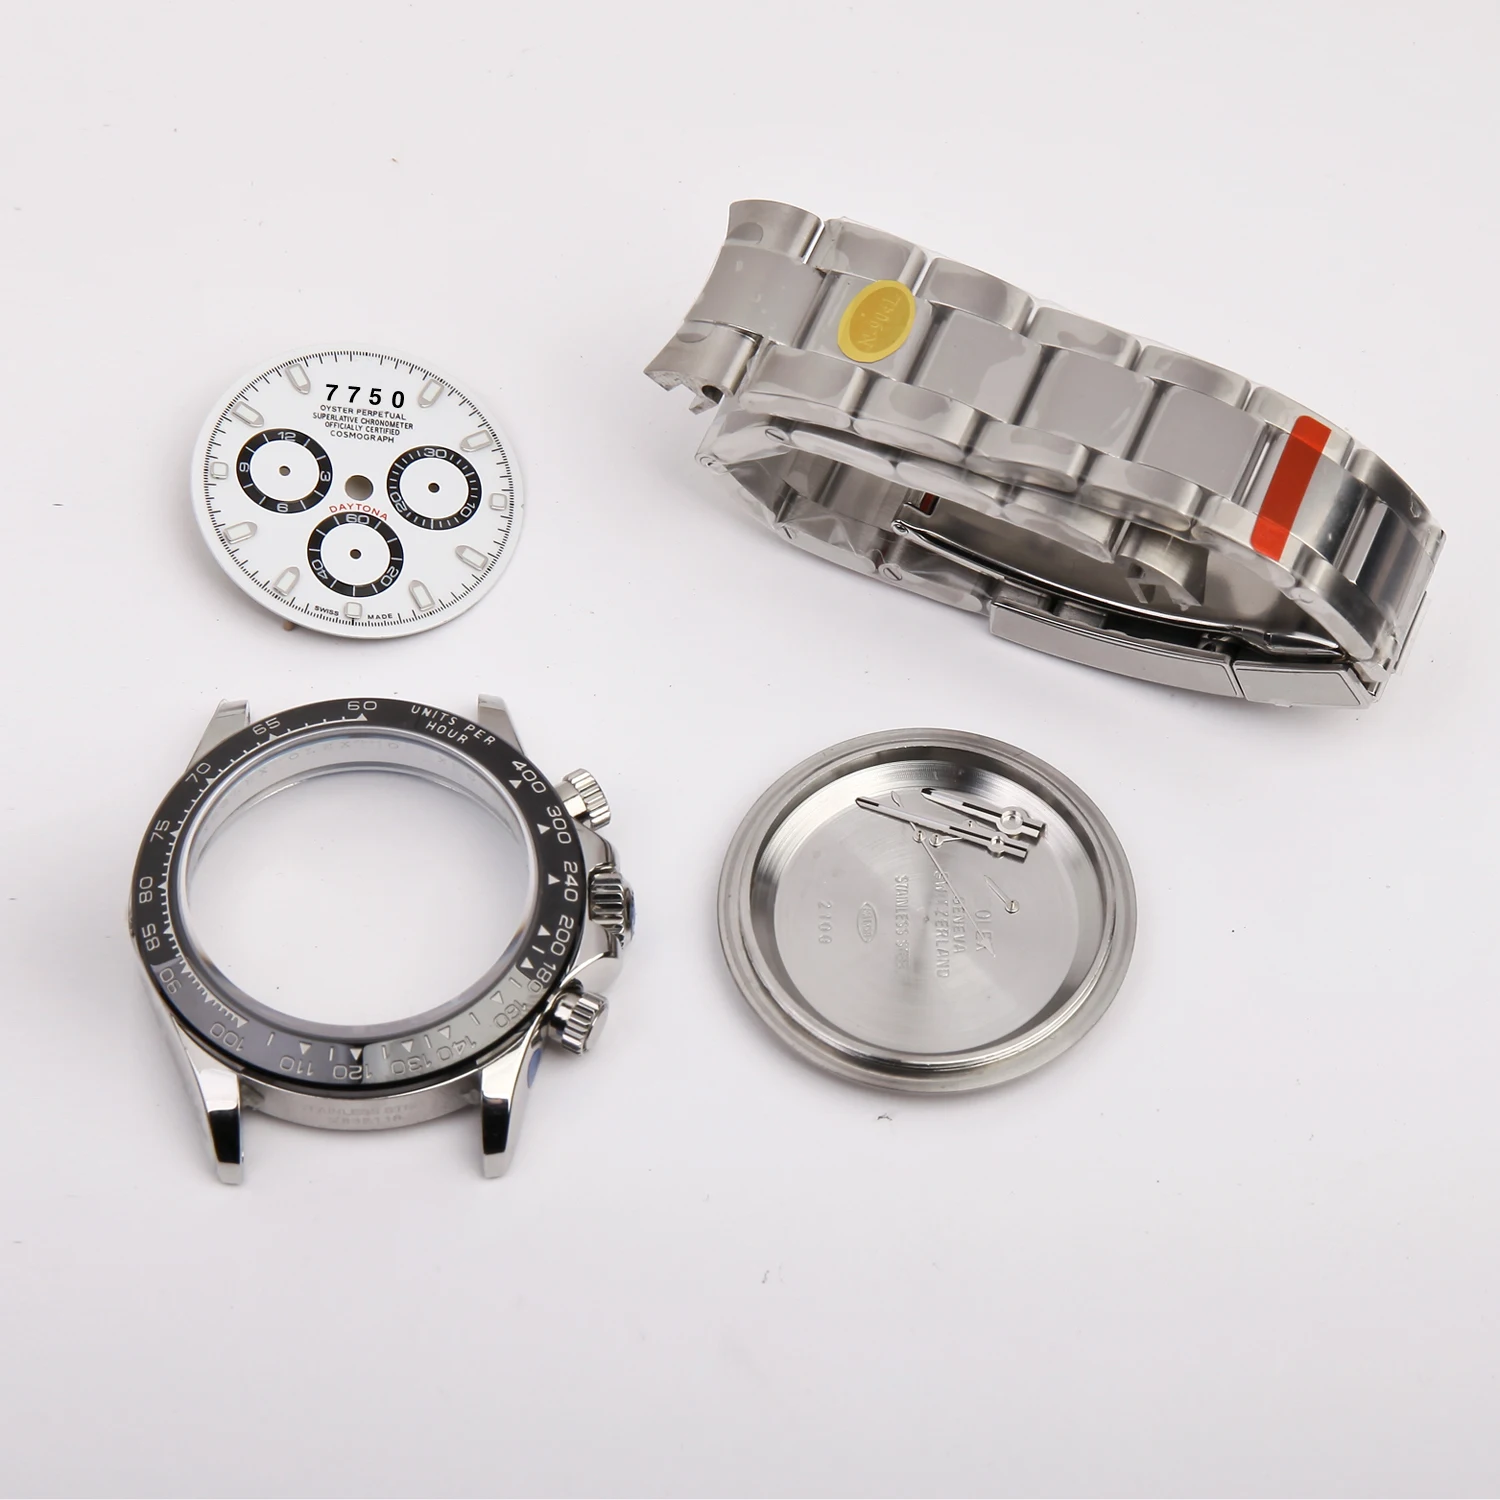 FIT ETA 7750 / china dandong 7753 movement watch repair parts for daytona chronograph watch case kit 904l steel